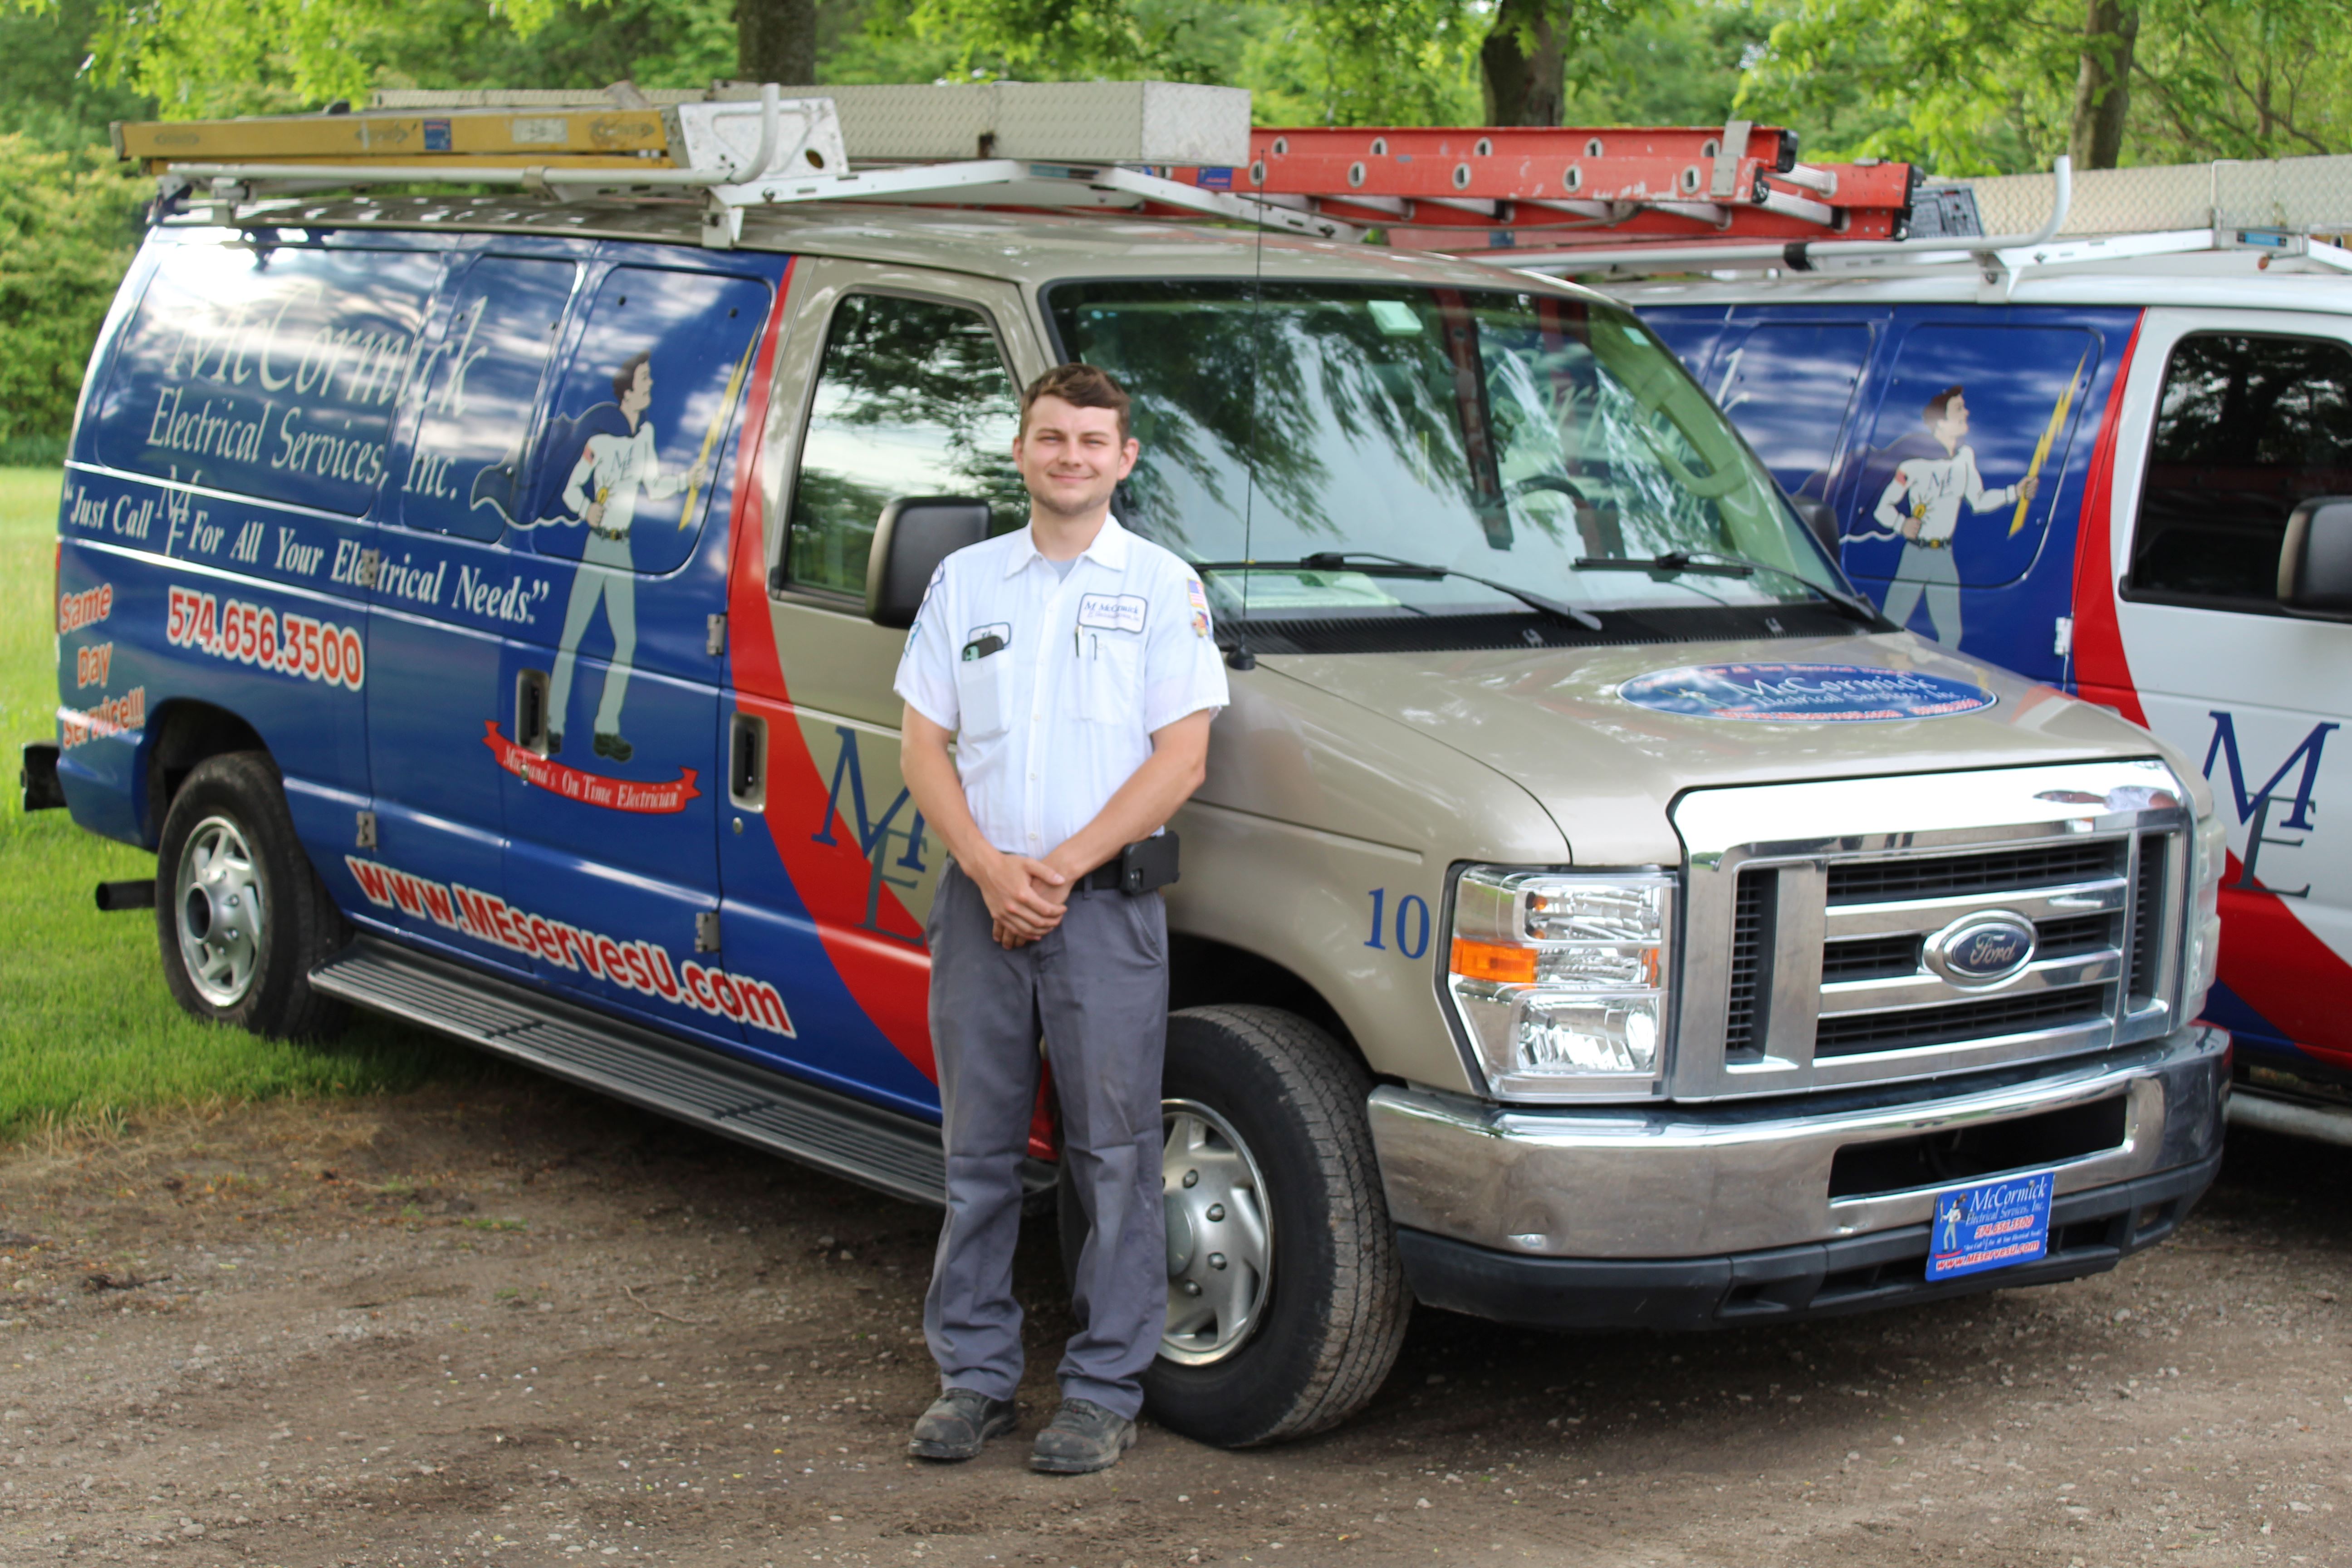 Jason Gill wearing an McCormick Electrical Services Inc. uniform